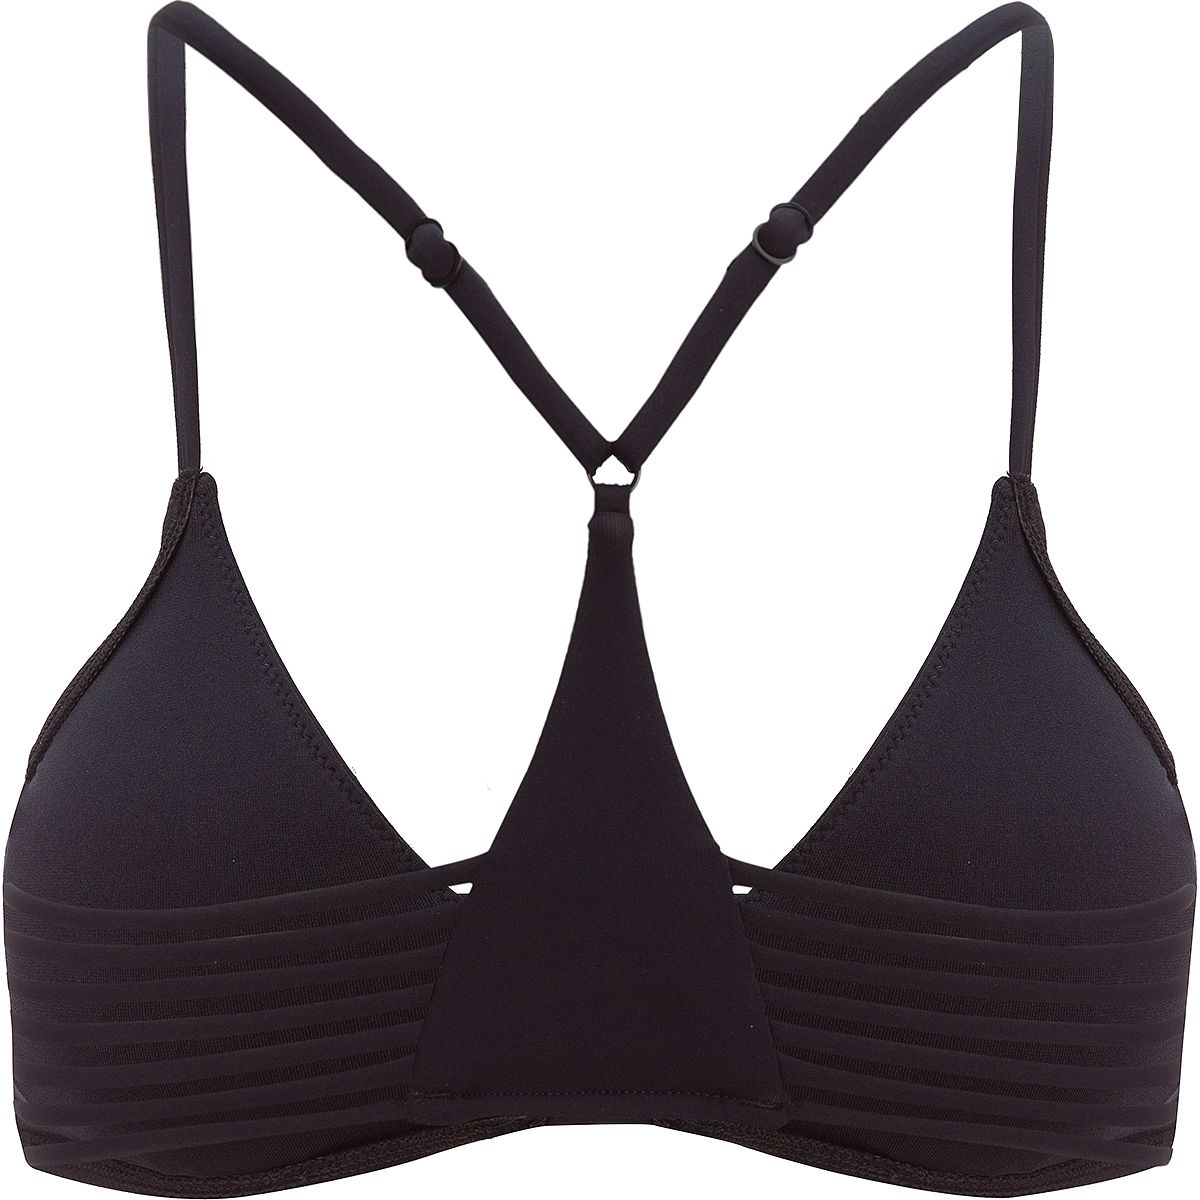 Seafolly Active Multi Rouleau Bralette Bikini Top - Women's Black 4 | eBay